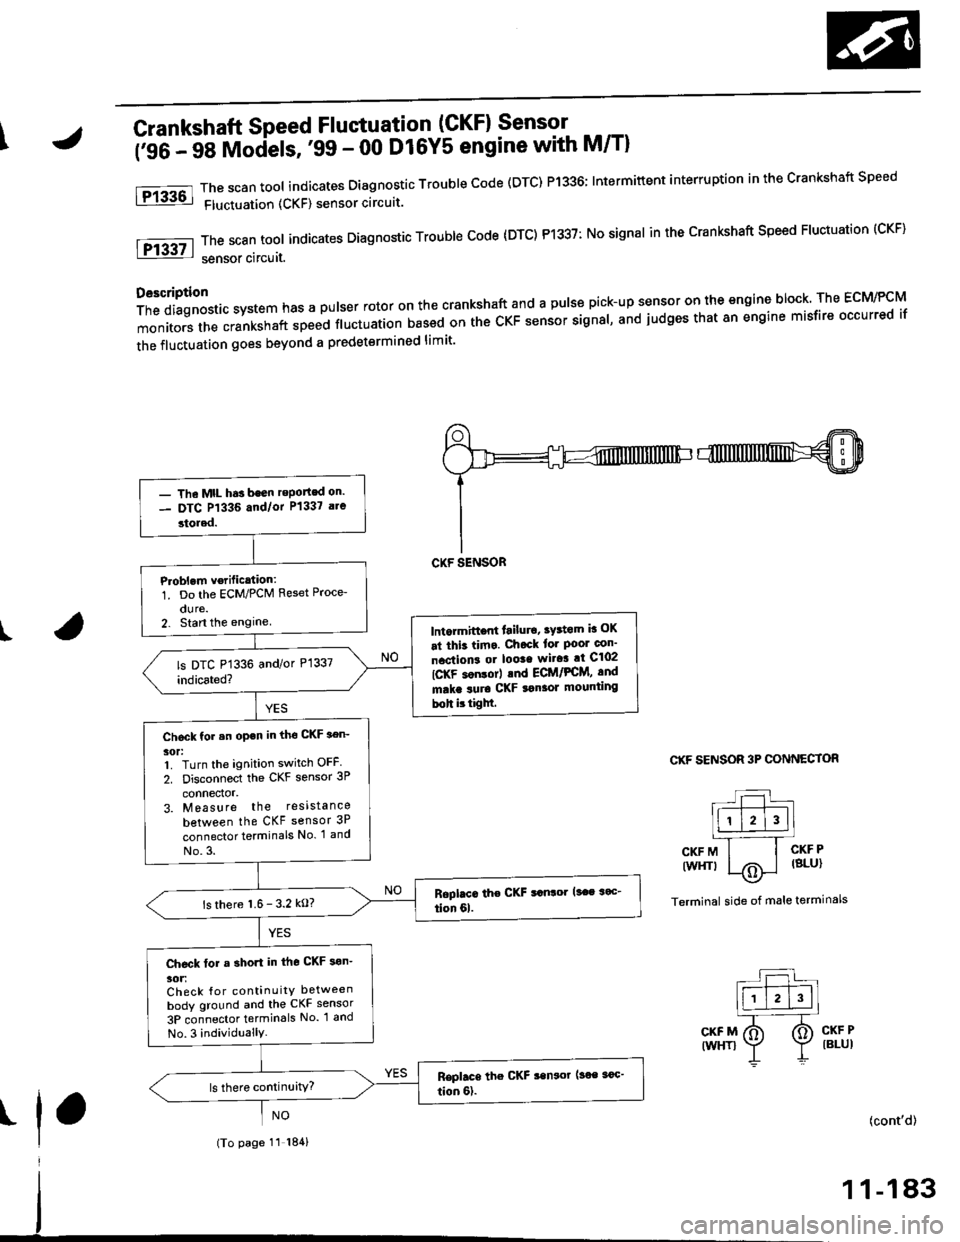 HONDA CIVIC 1999 6.G Repair Manual \Crankshaft Speed Fluctuation (GKFI Sensor .
firC- 48 Models, 99 - 00 D16Y5 engine with M/Tl
The scan tool indicates Diagnostic Trouble Code (DTC) P1336; Intermiftent interruption in the Crankshaft S